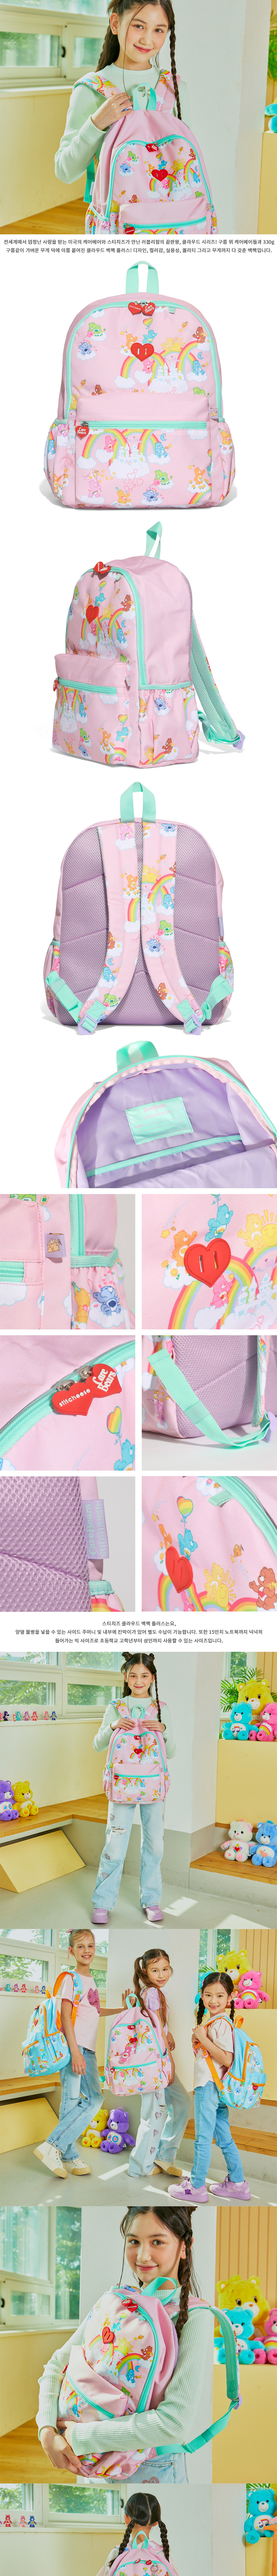 carebears-backpack-plus-pink-final1.jpg